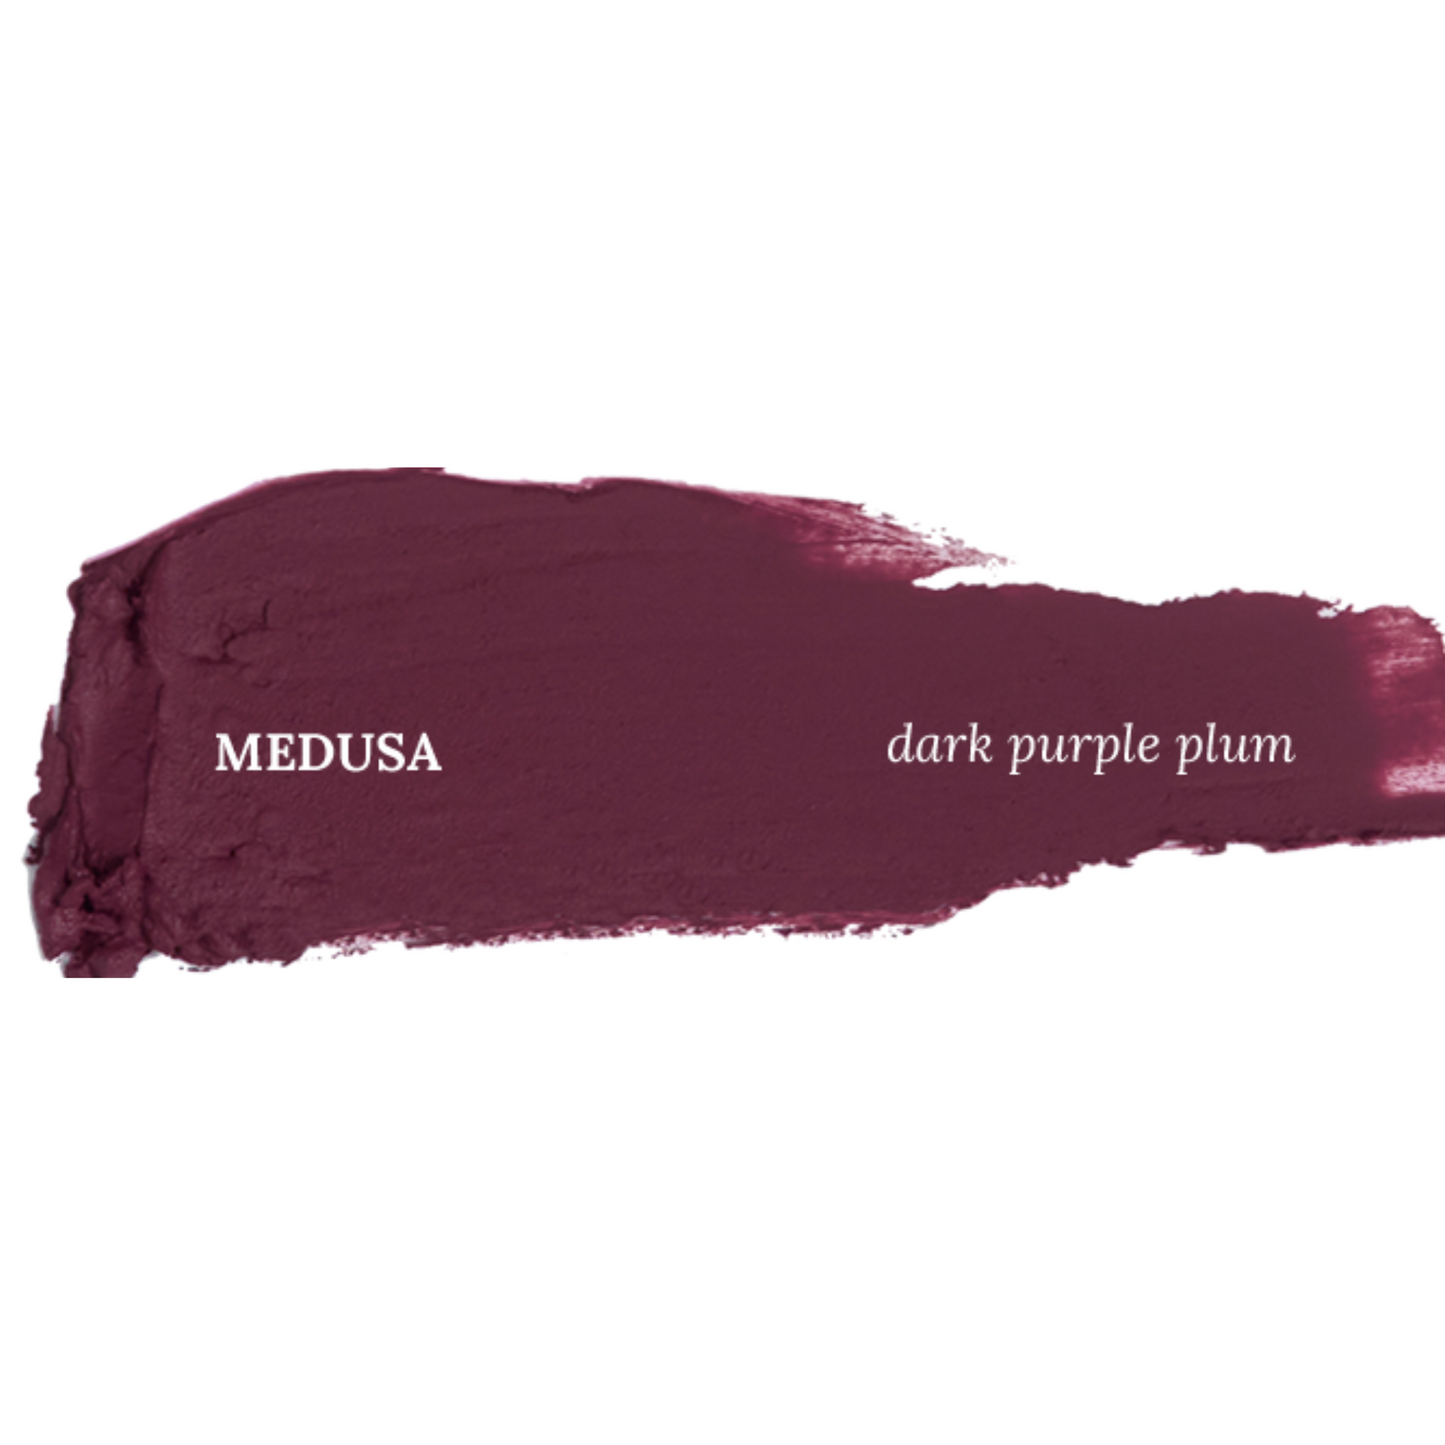 Plum lipstick Medusa